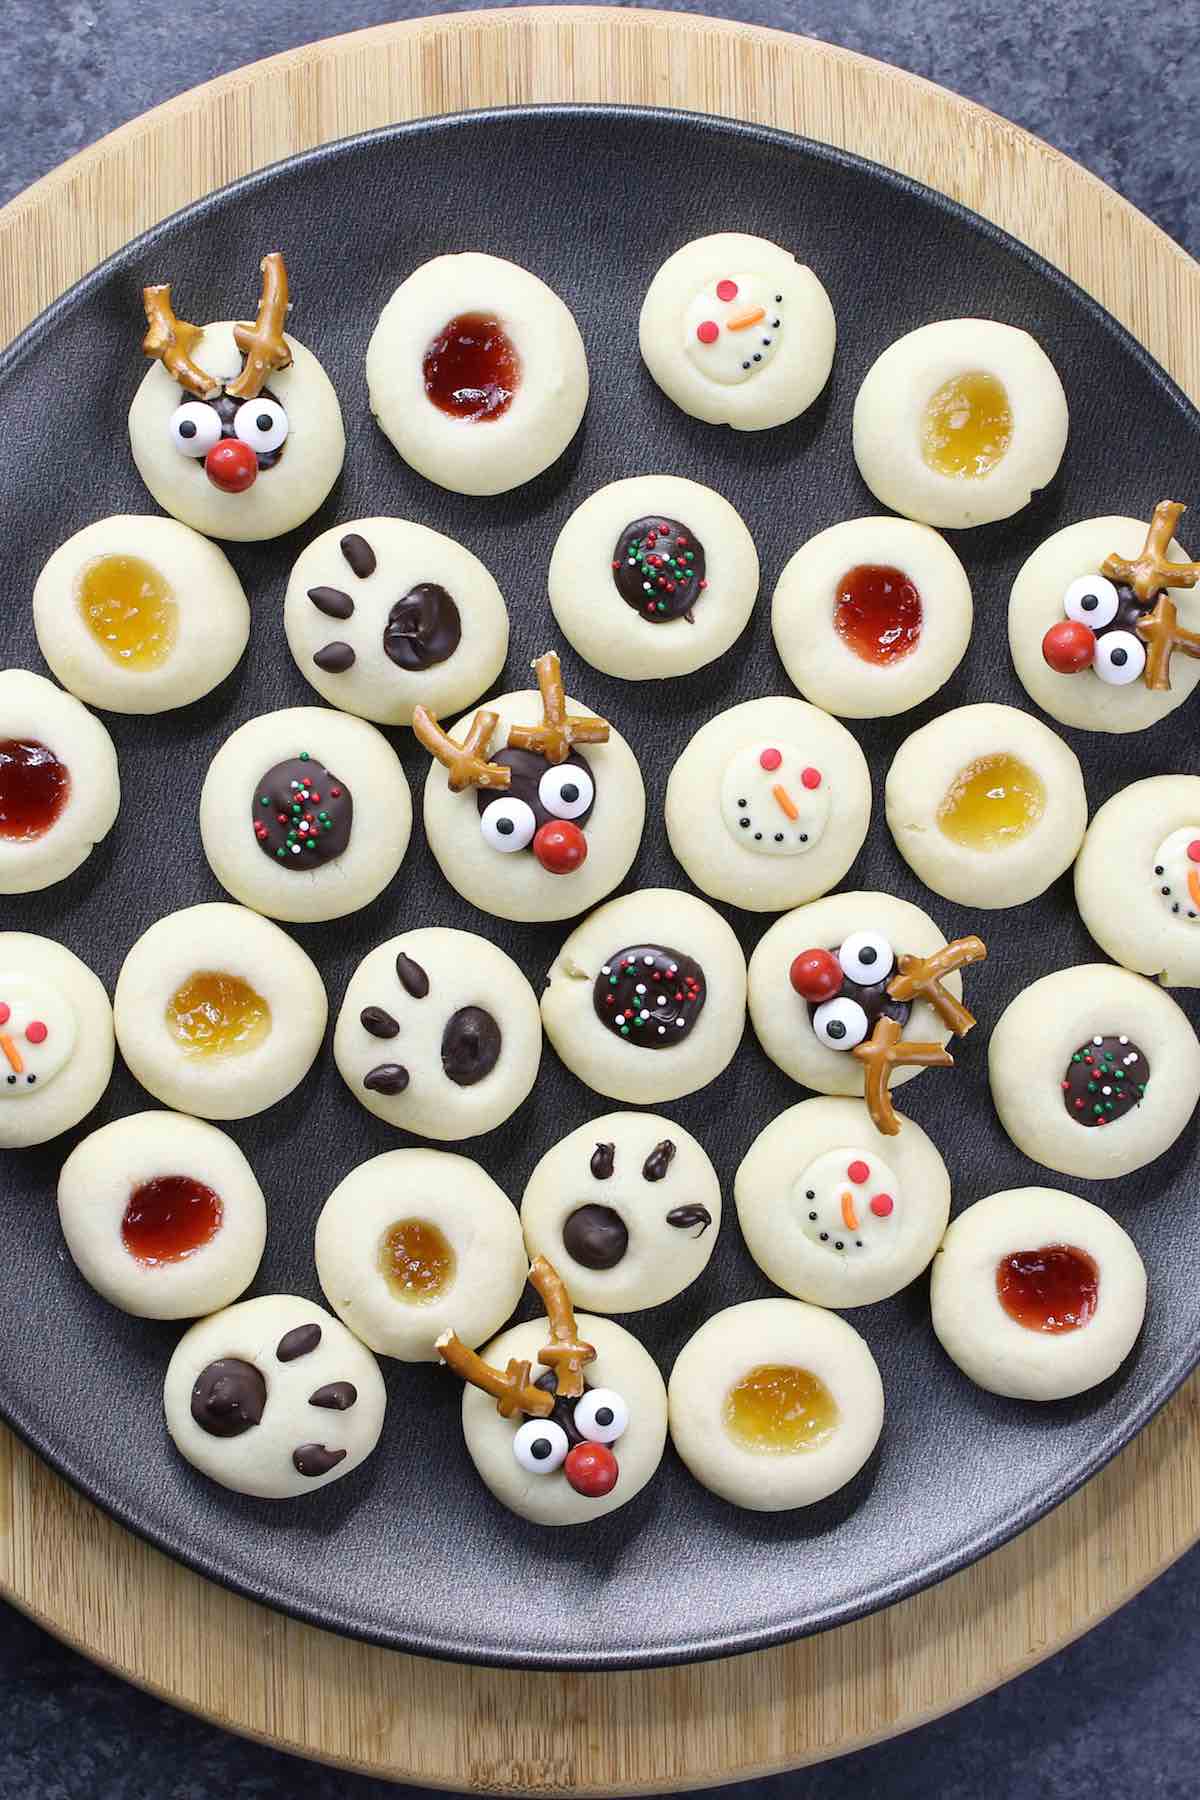 Mixture of jam thumbprint cookies and Christmas chocolate thumbprint cookies on a dark plate.